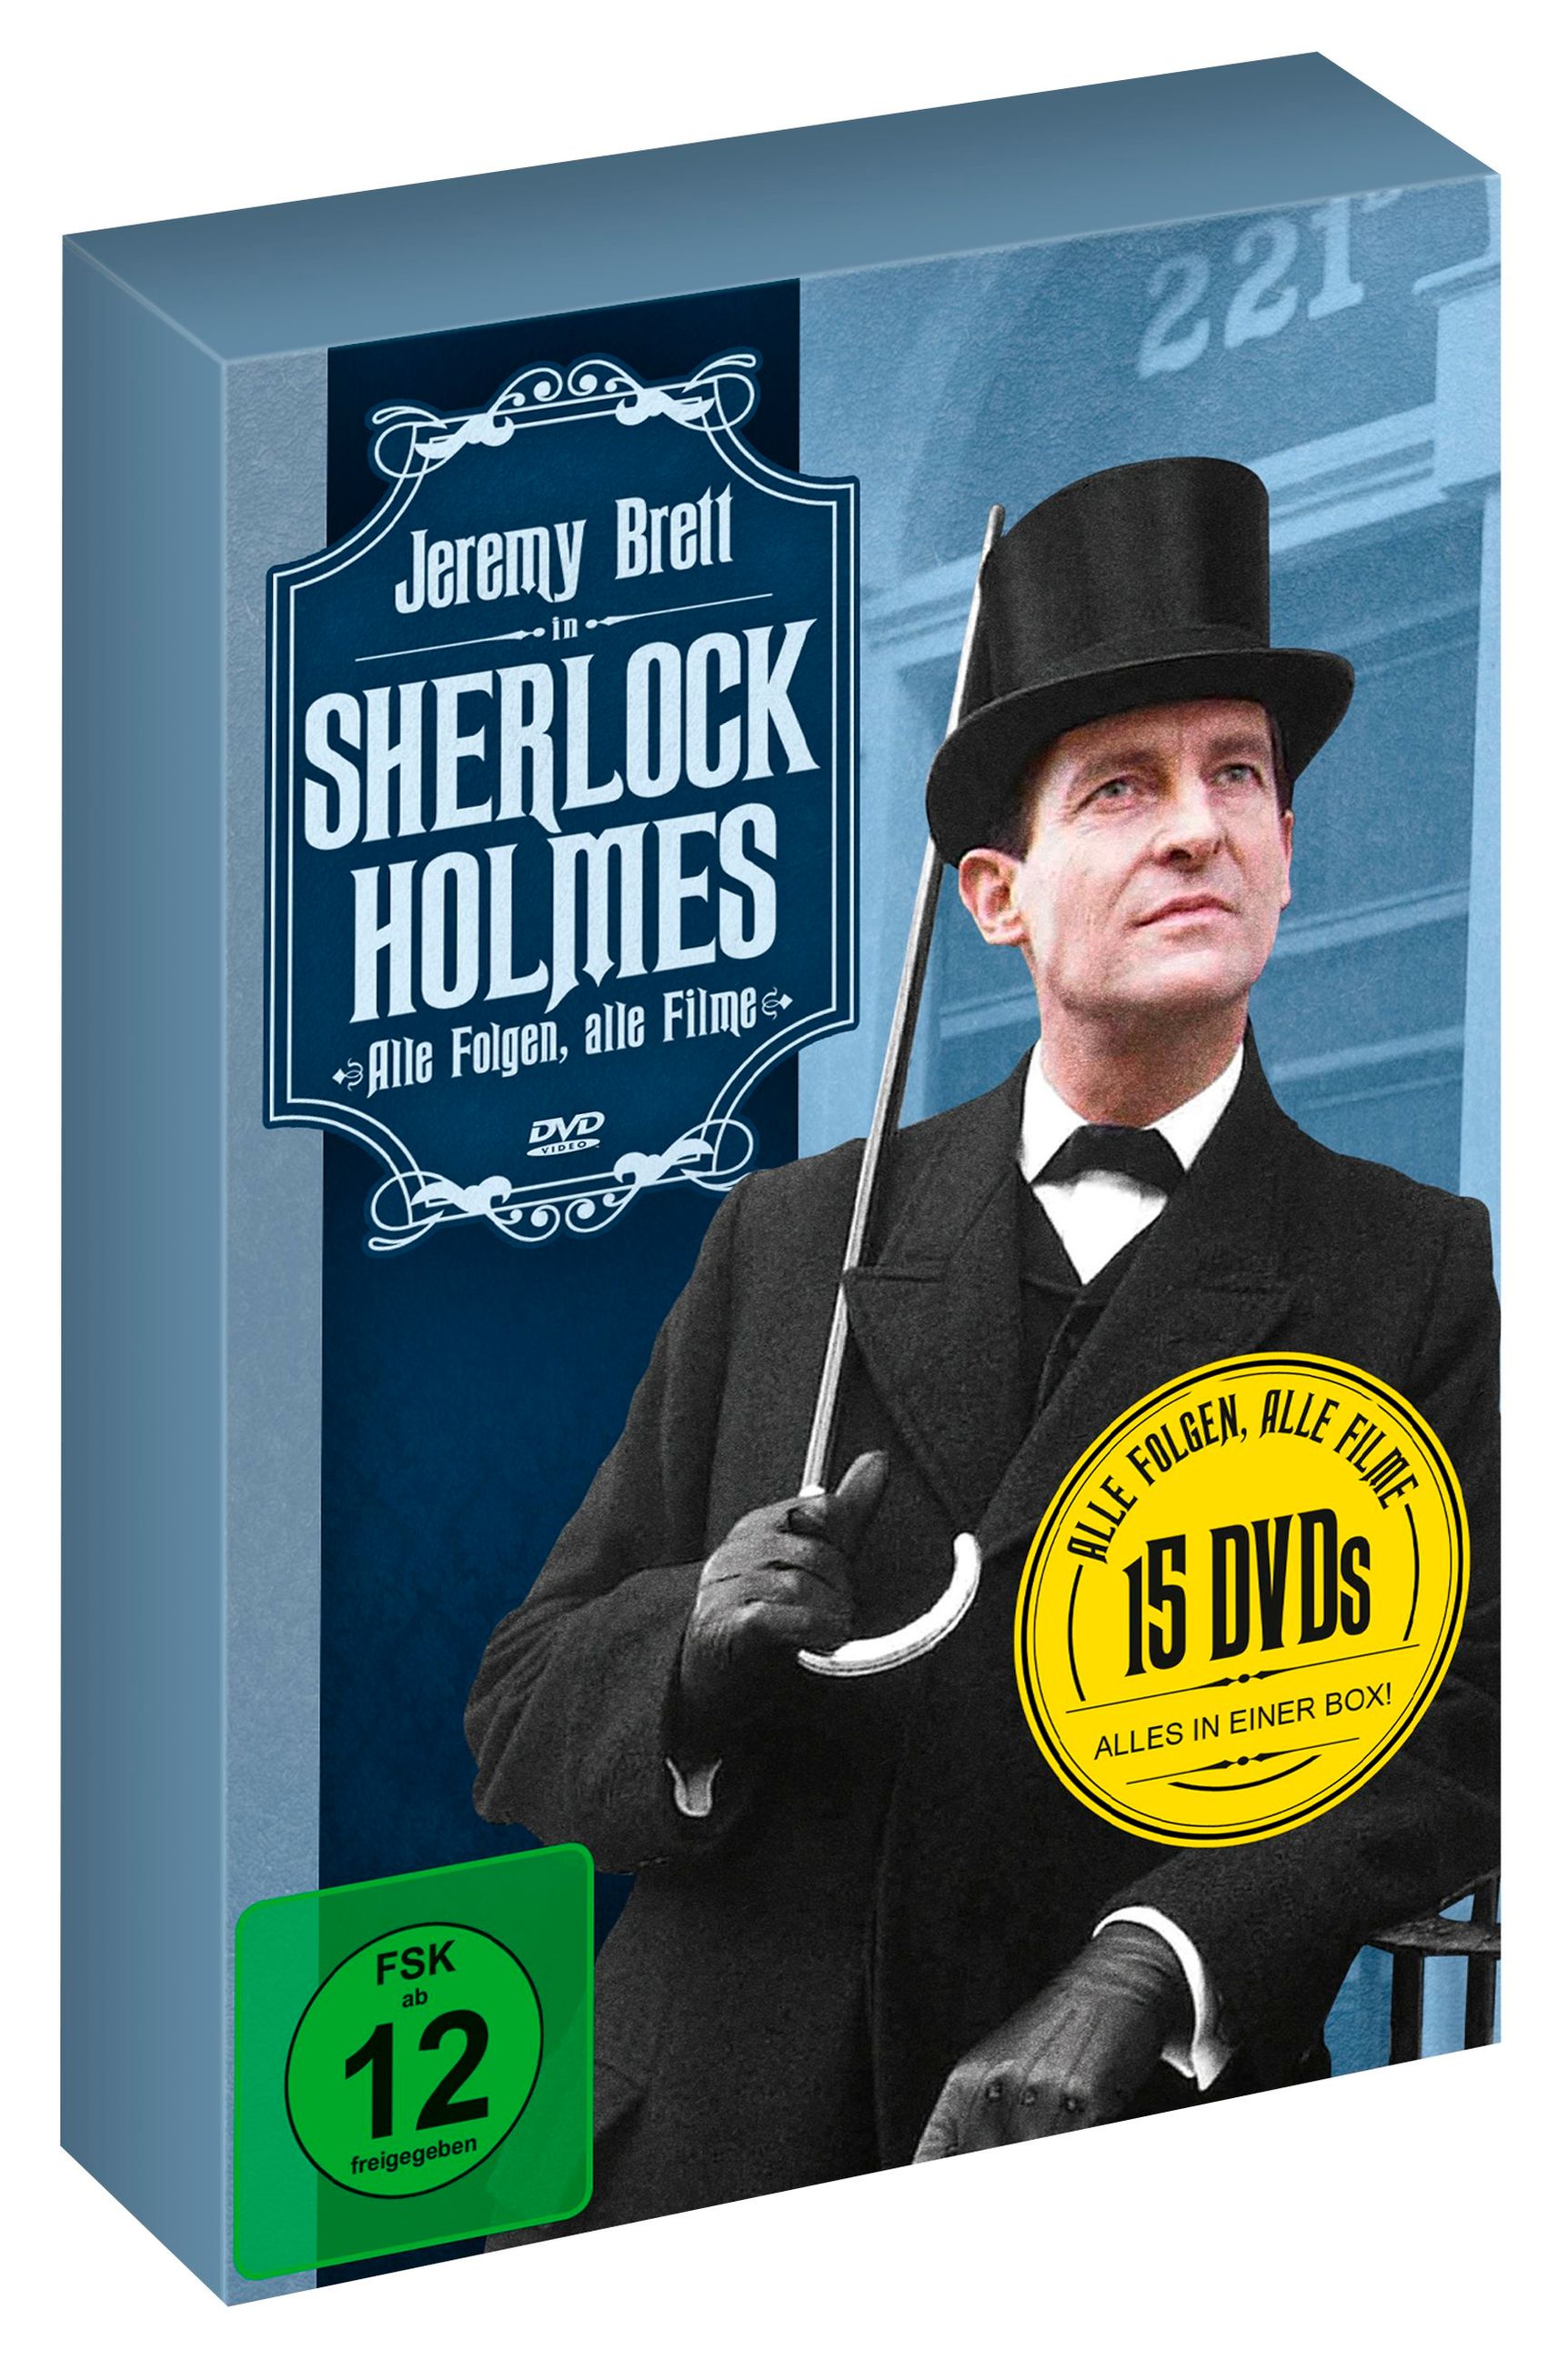 Sherlock Holmes - Alle Folgen, alle Filme DVD | Weltbild.at